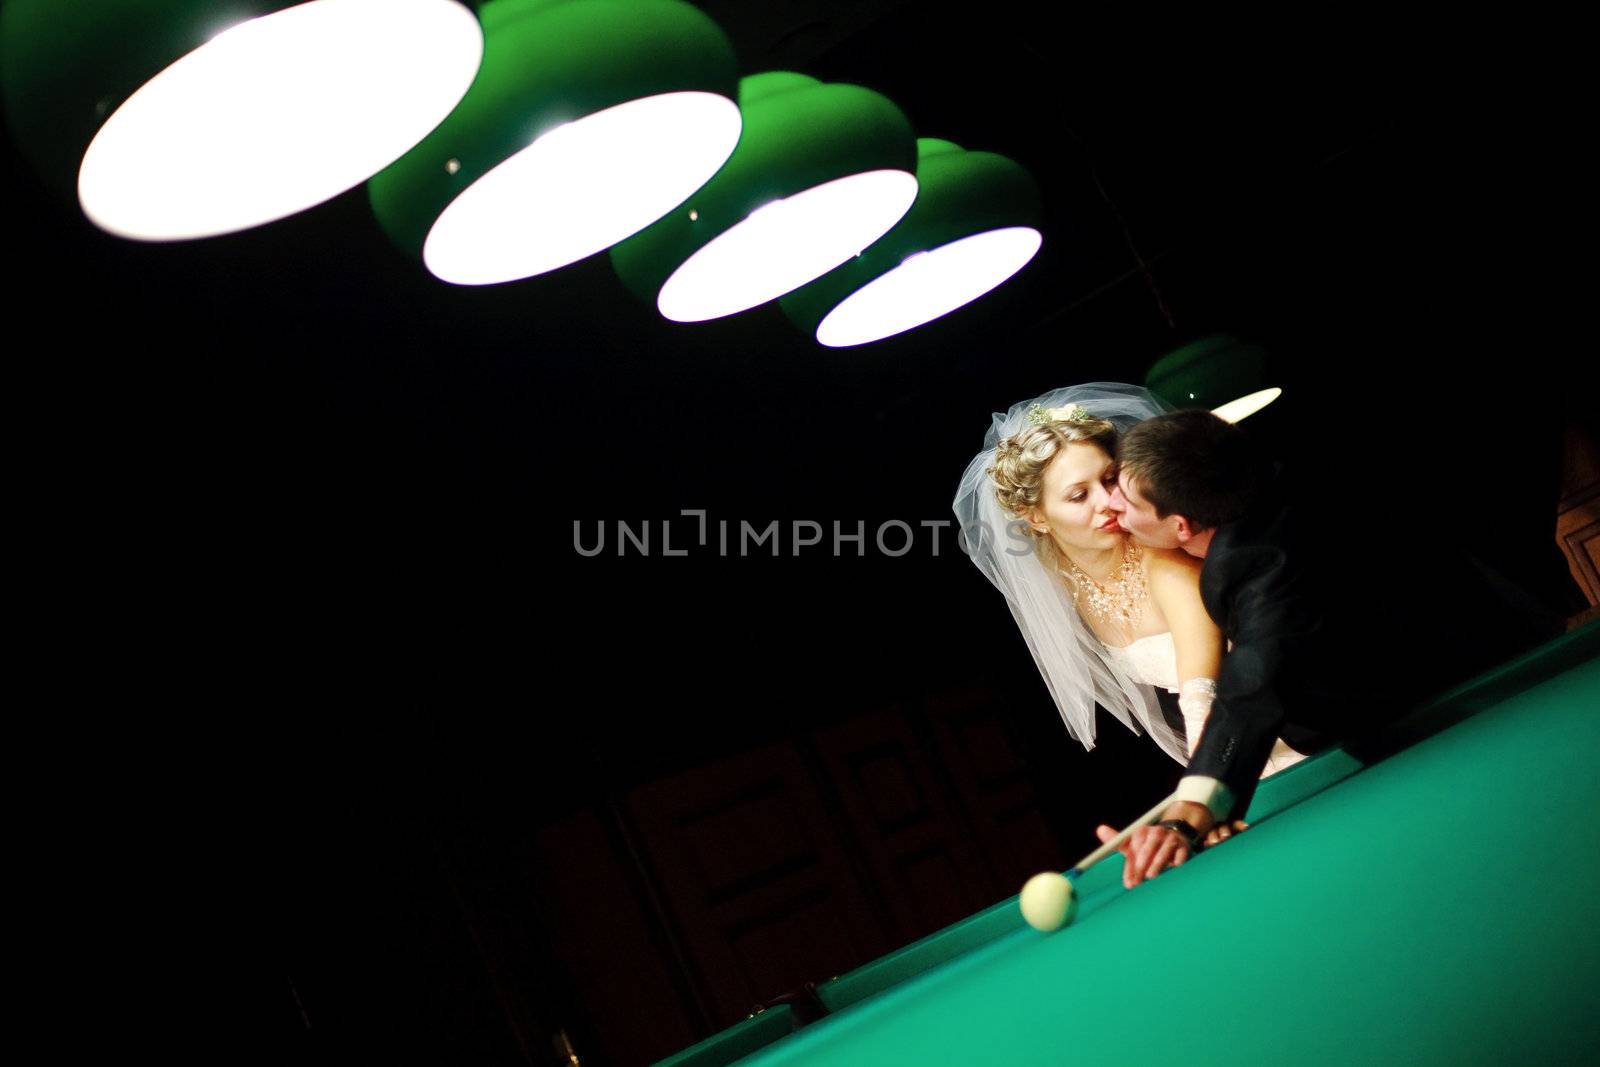 bride playing billiard at night